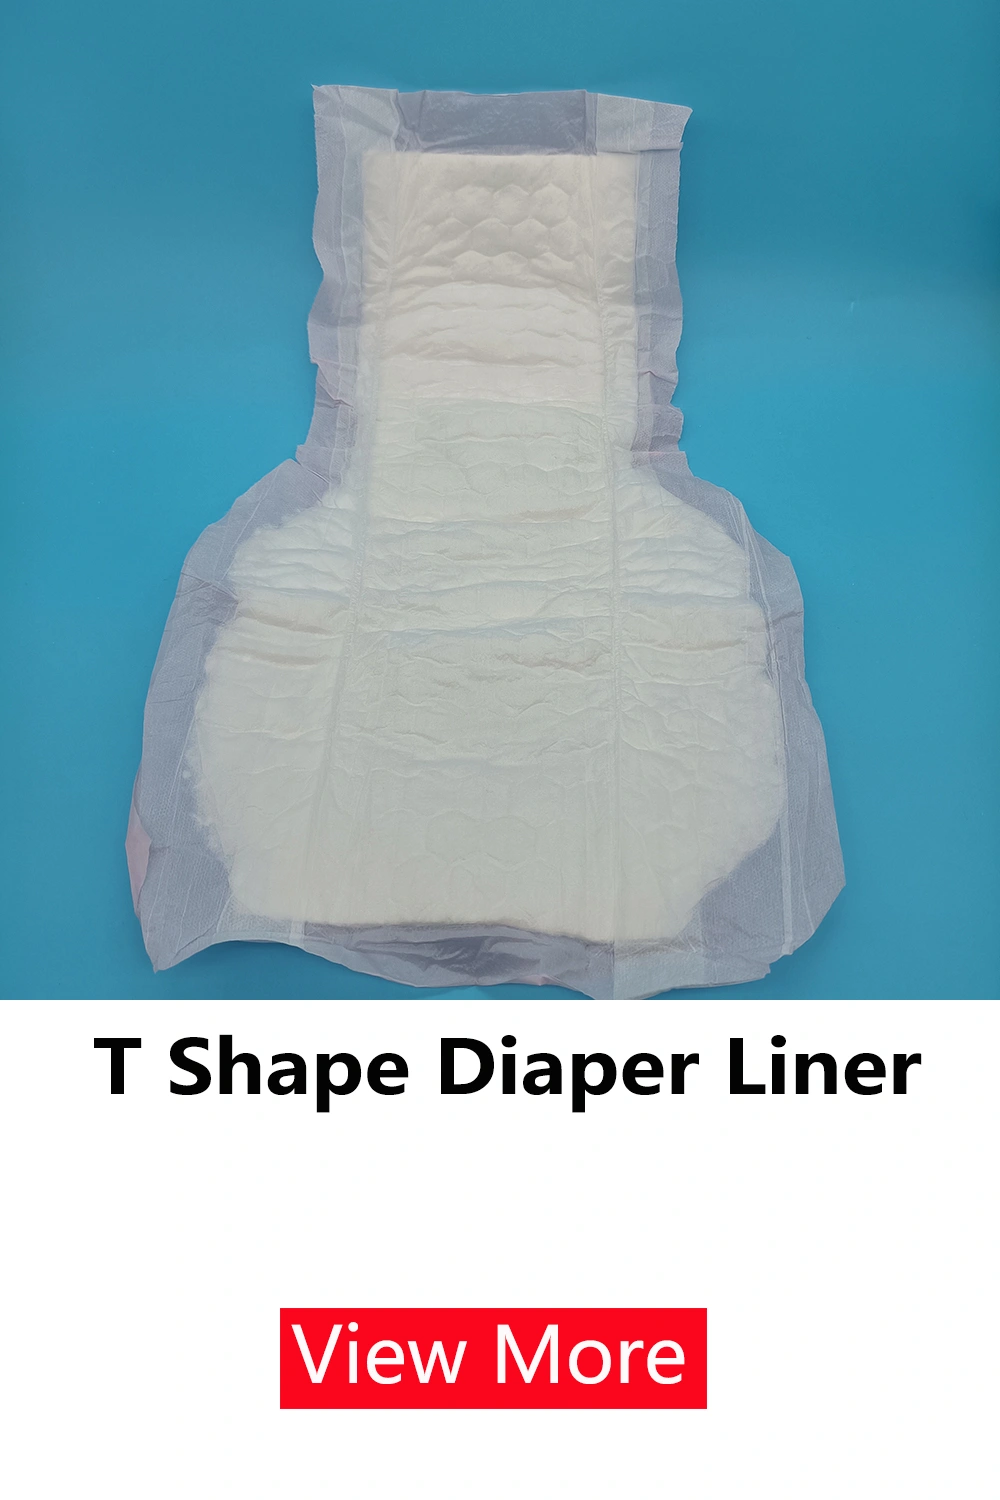 T shape diaper liner picture